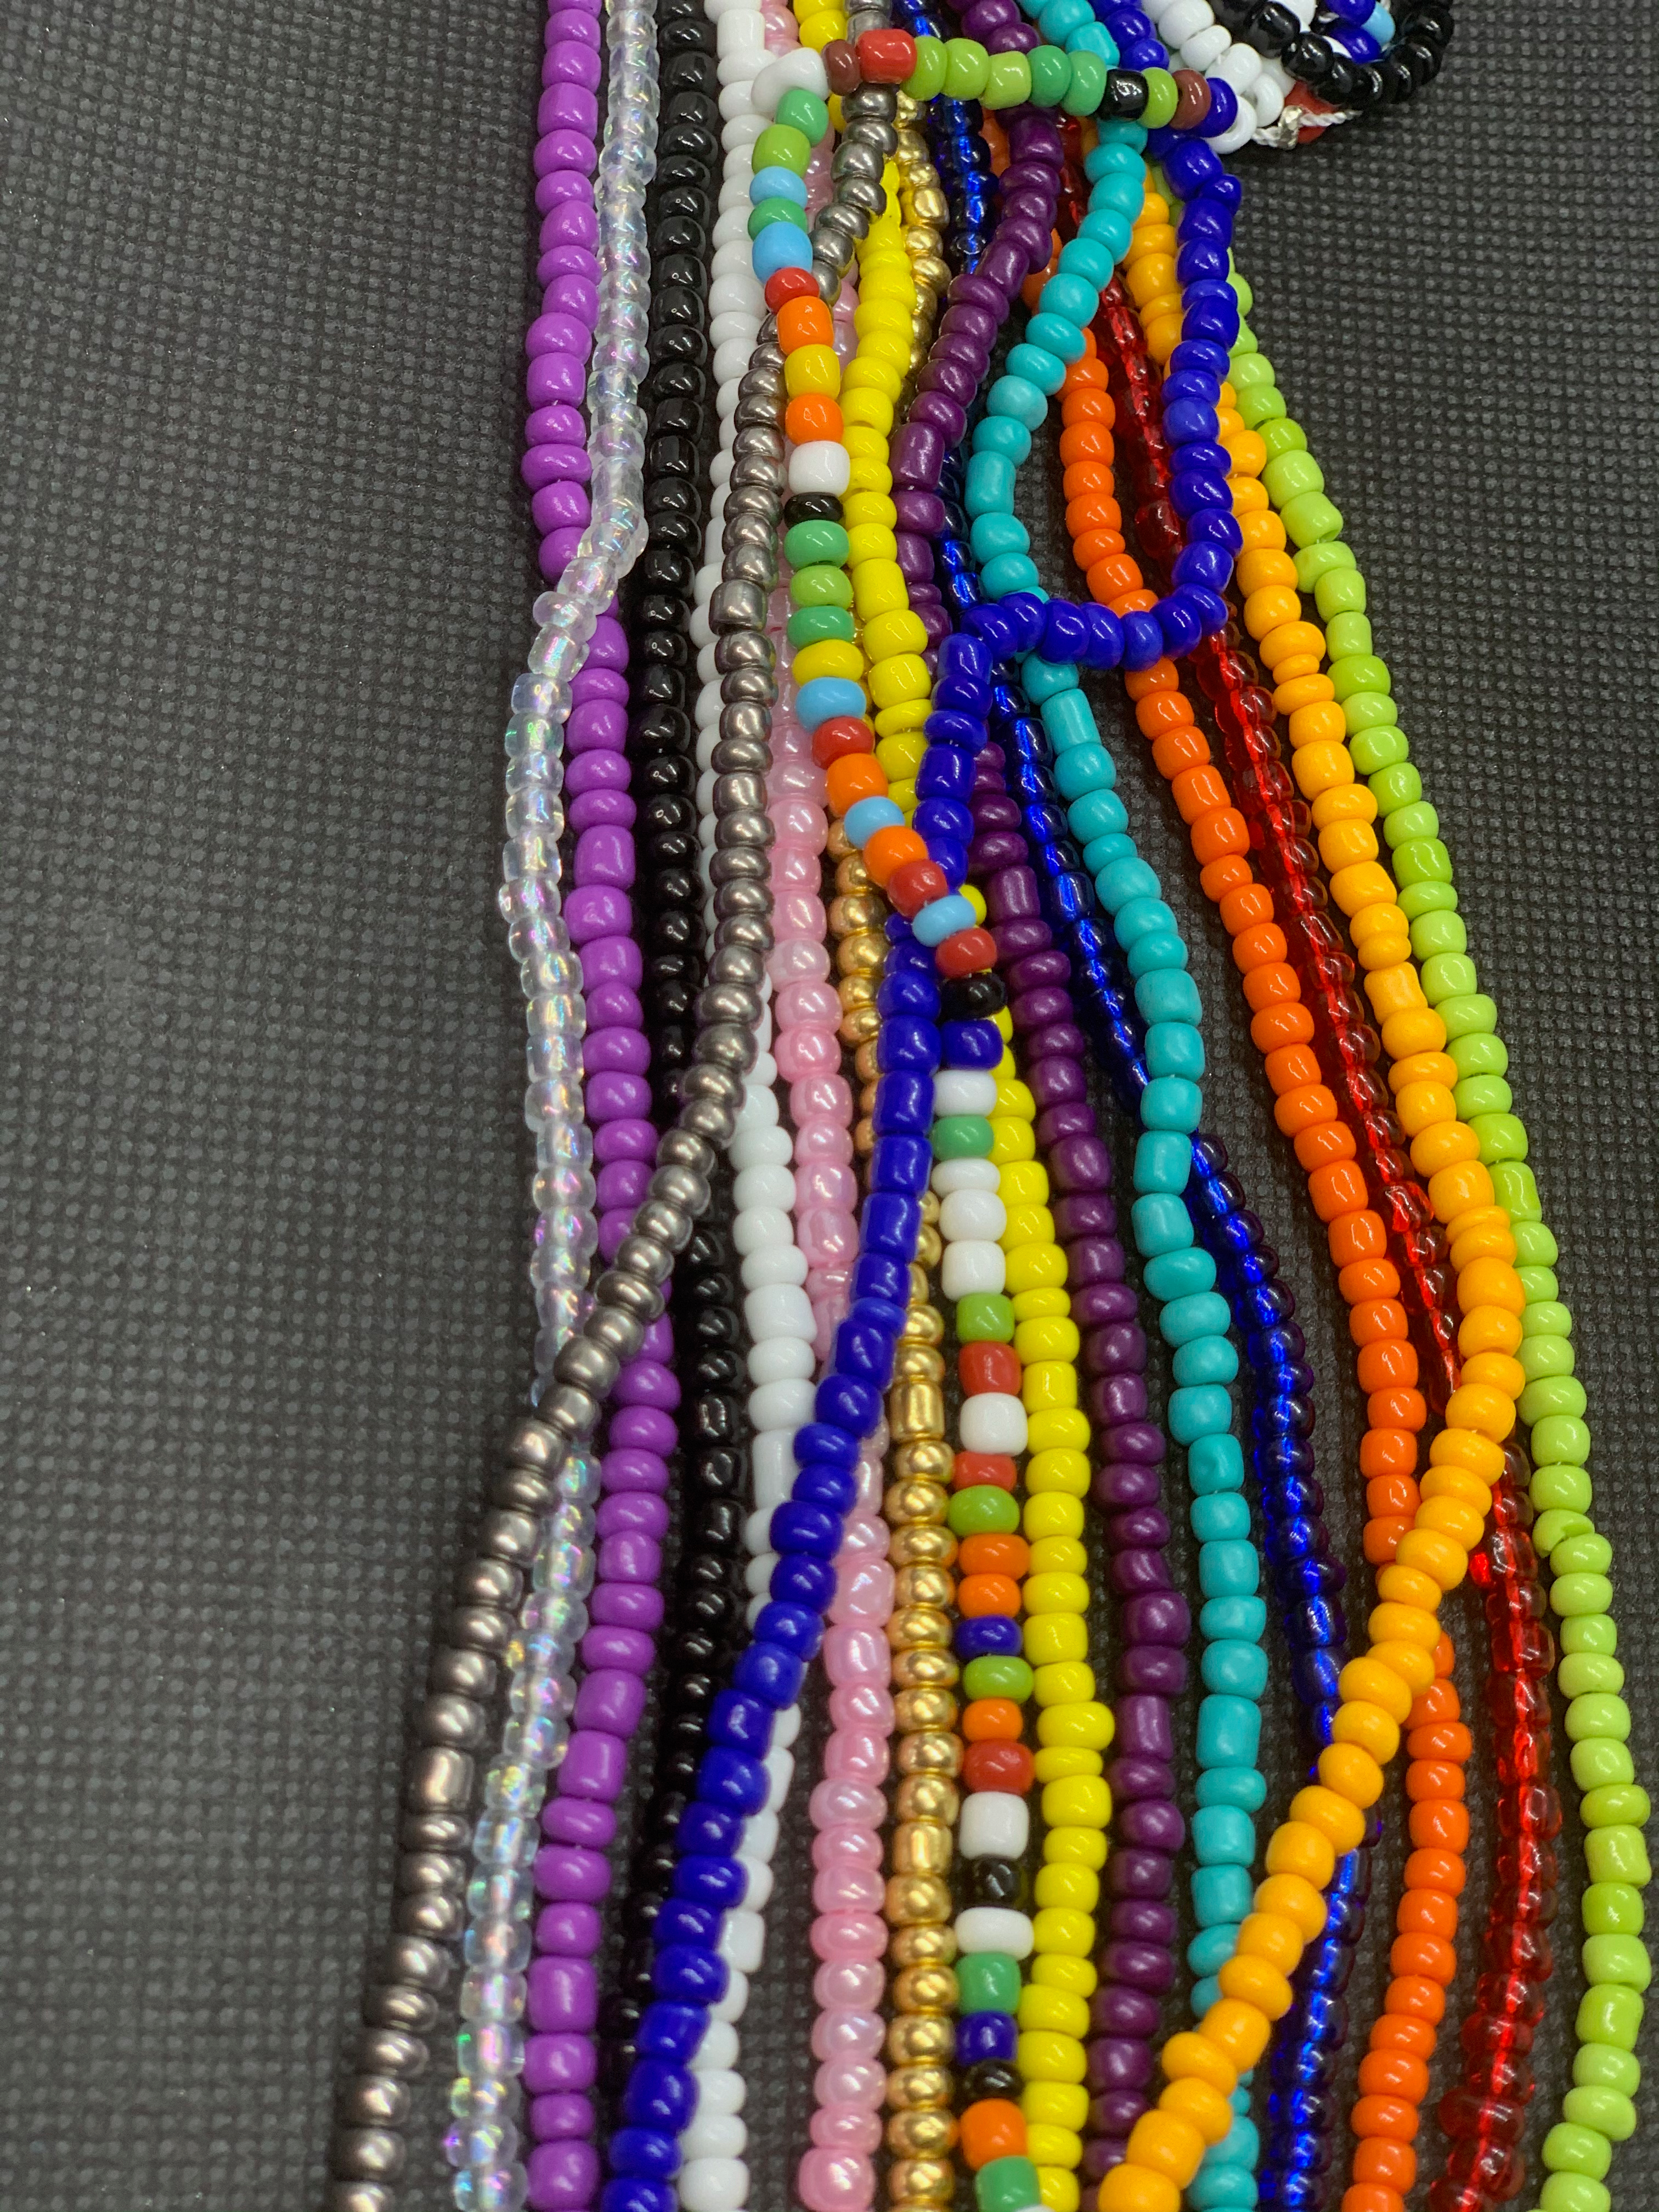 Beads of the Rainbow